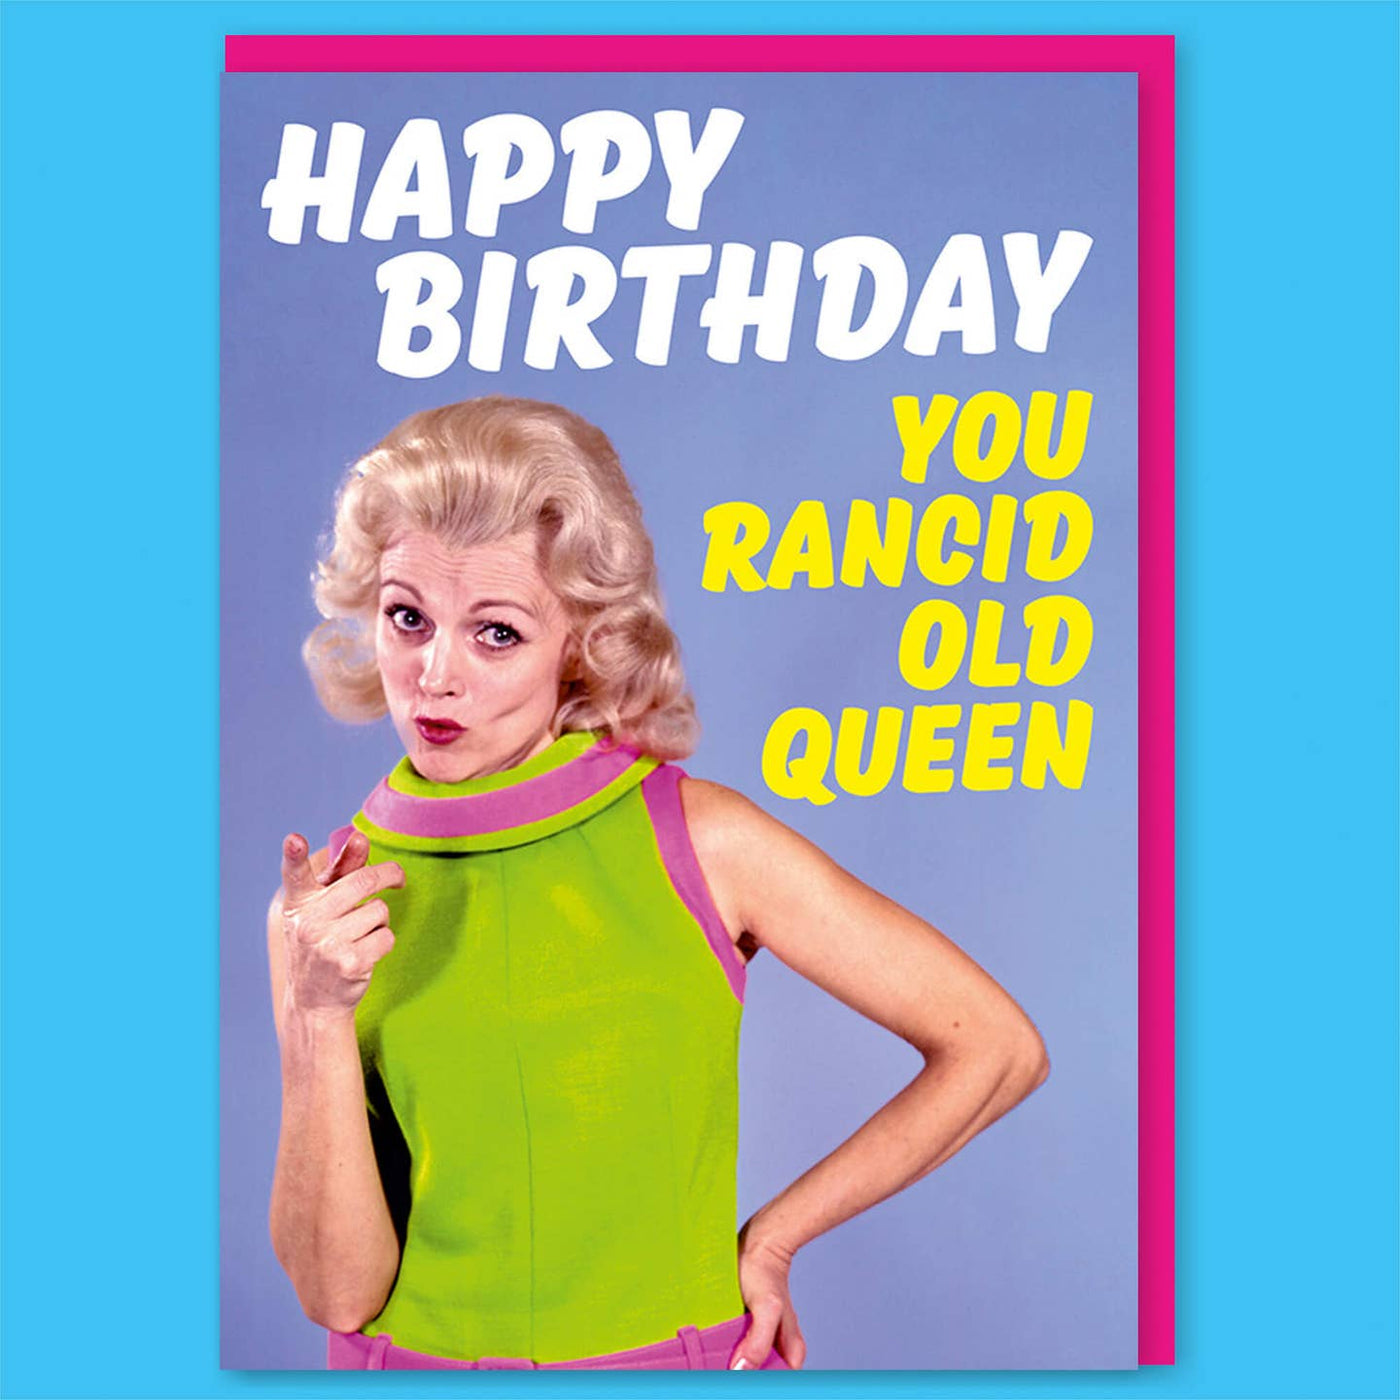 Rancid Old Queen Birthday Card